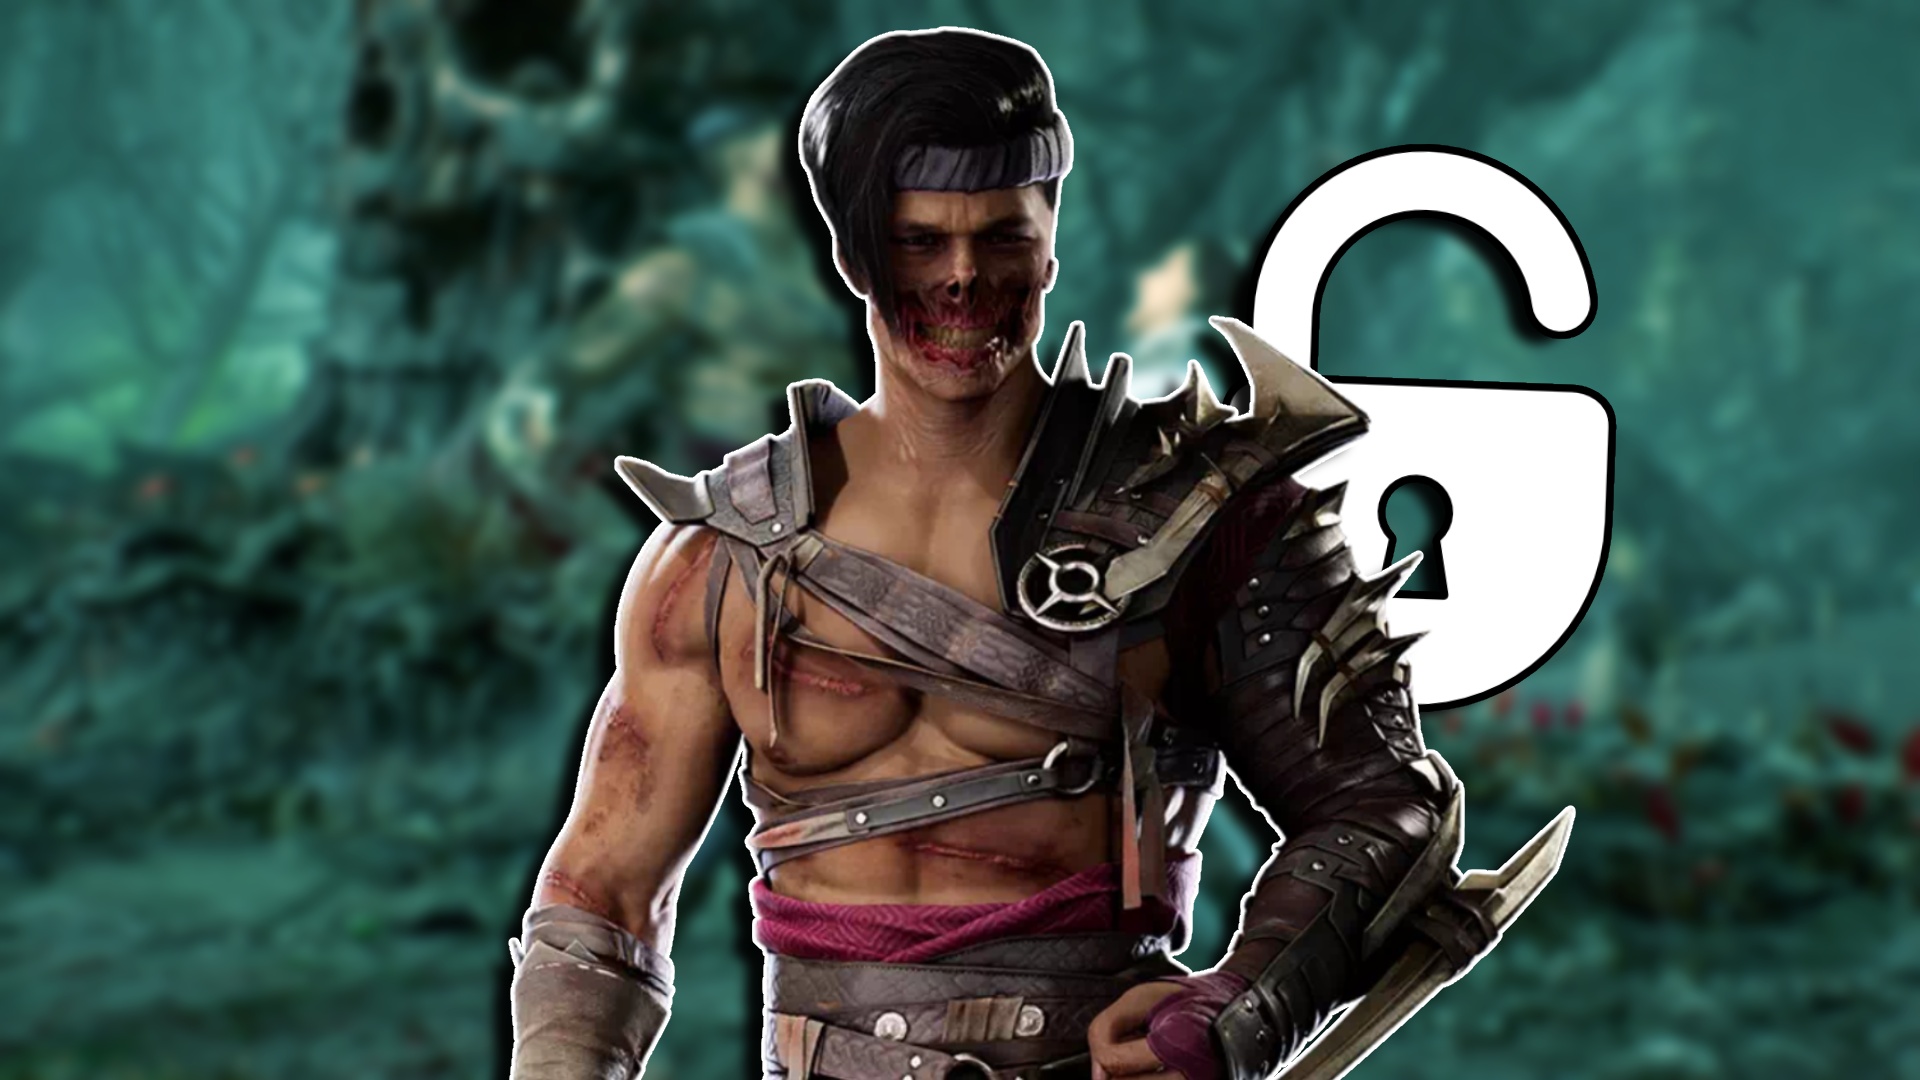 Mortal Kombat 1 now includes the option to unlock Havik, Shang